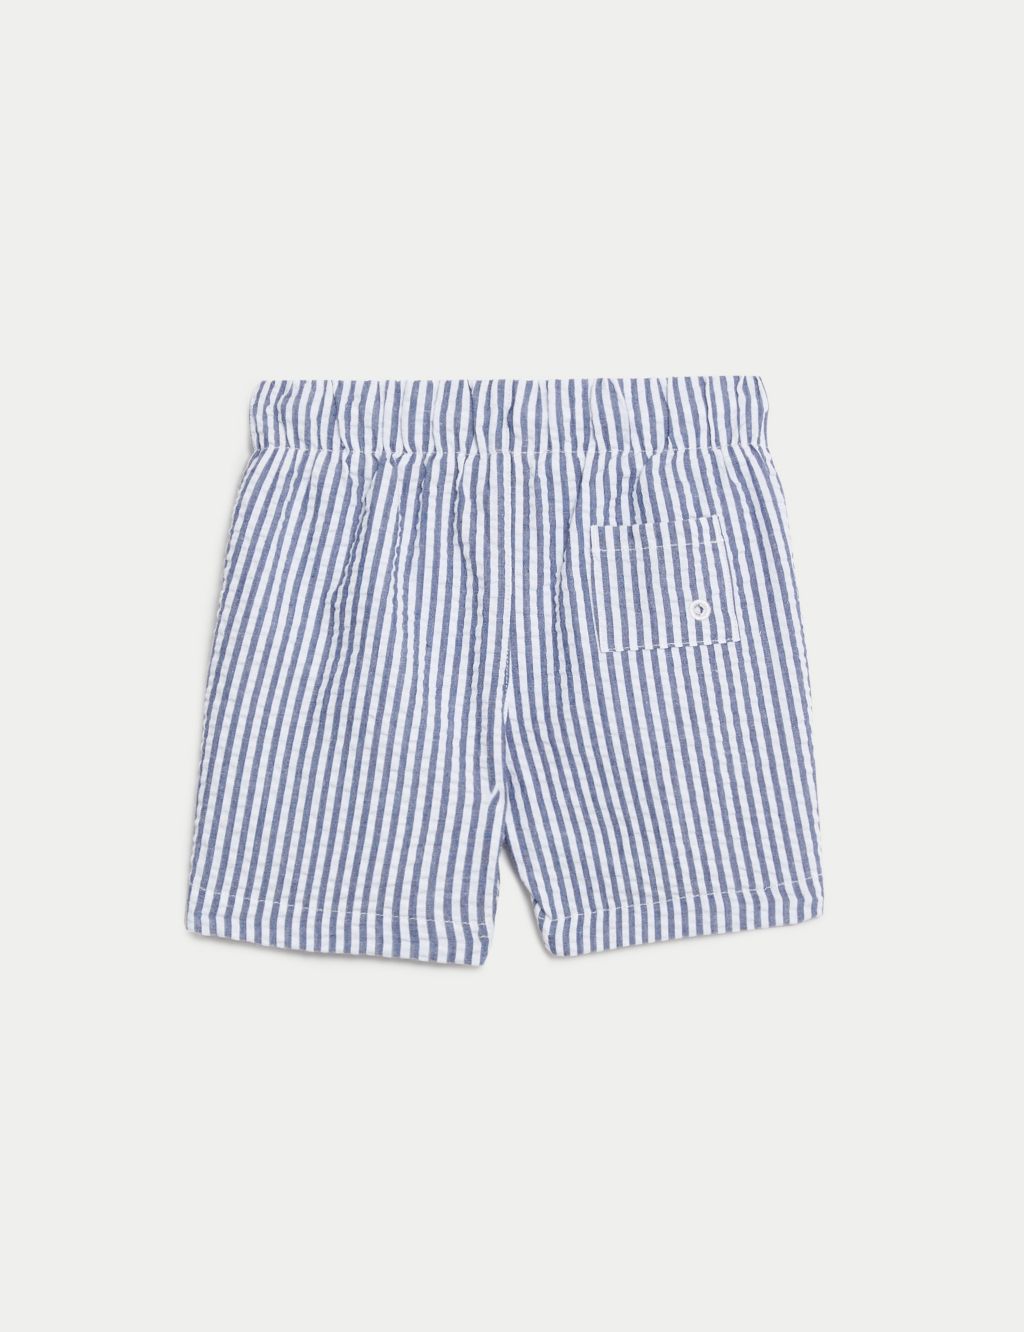 Cotton Blend Striped Swim Shorts (0-3 Yrs) image 2